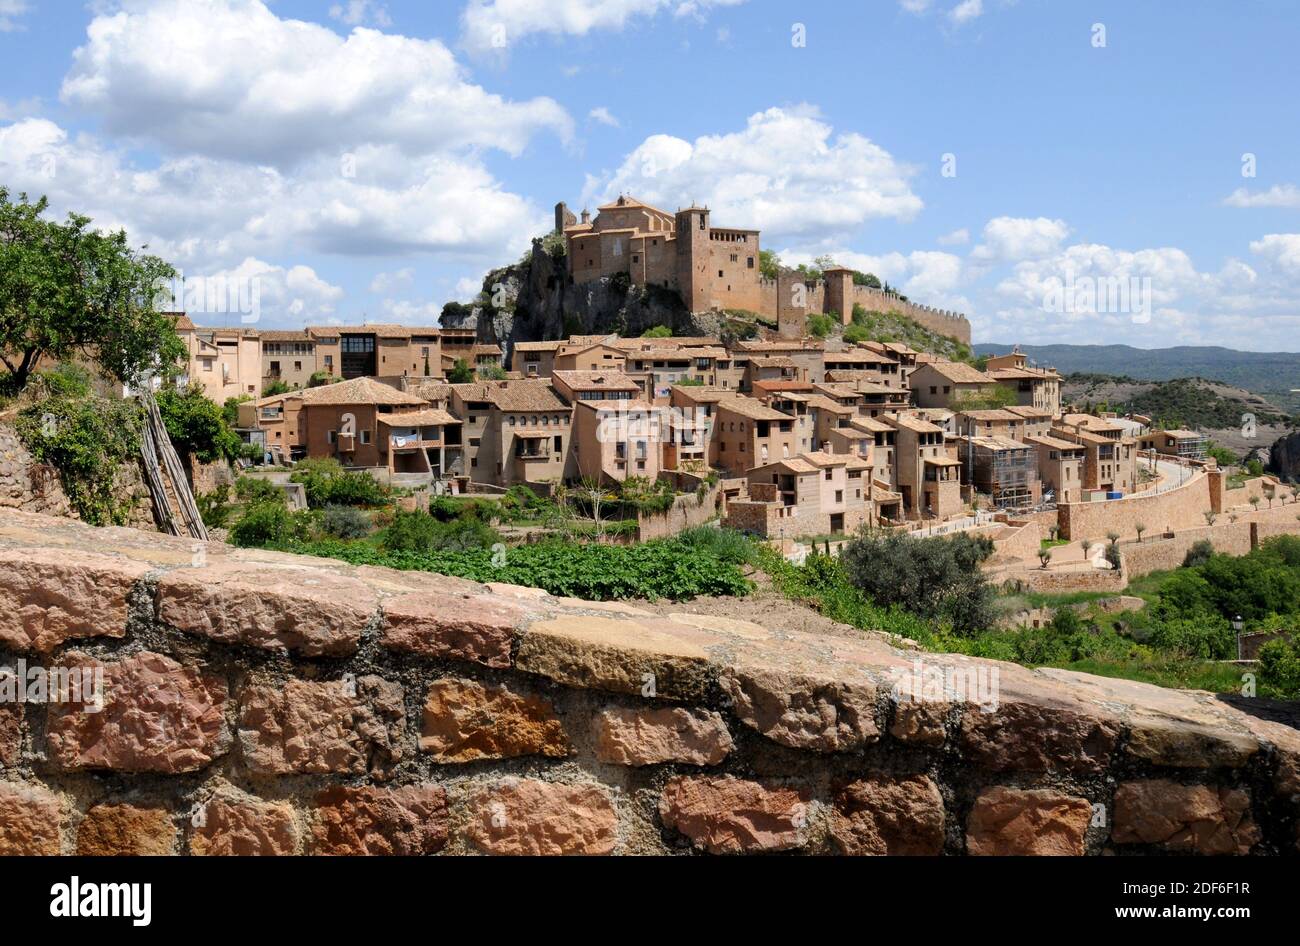 Alquezar. Sobrarbe, Huesca province, Aragon, Spain. Stock Photo